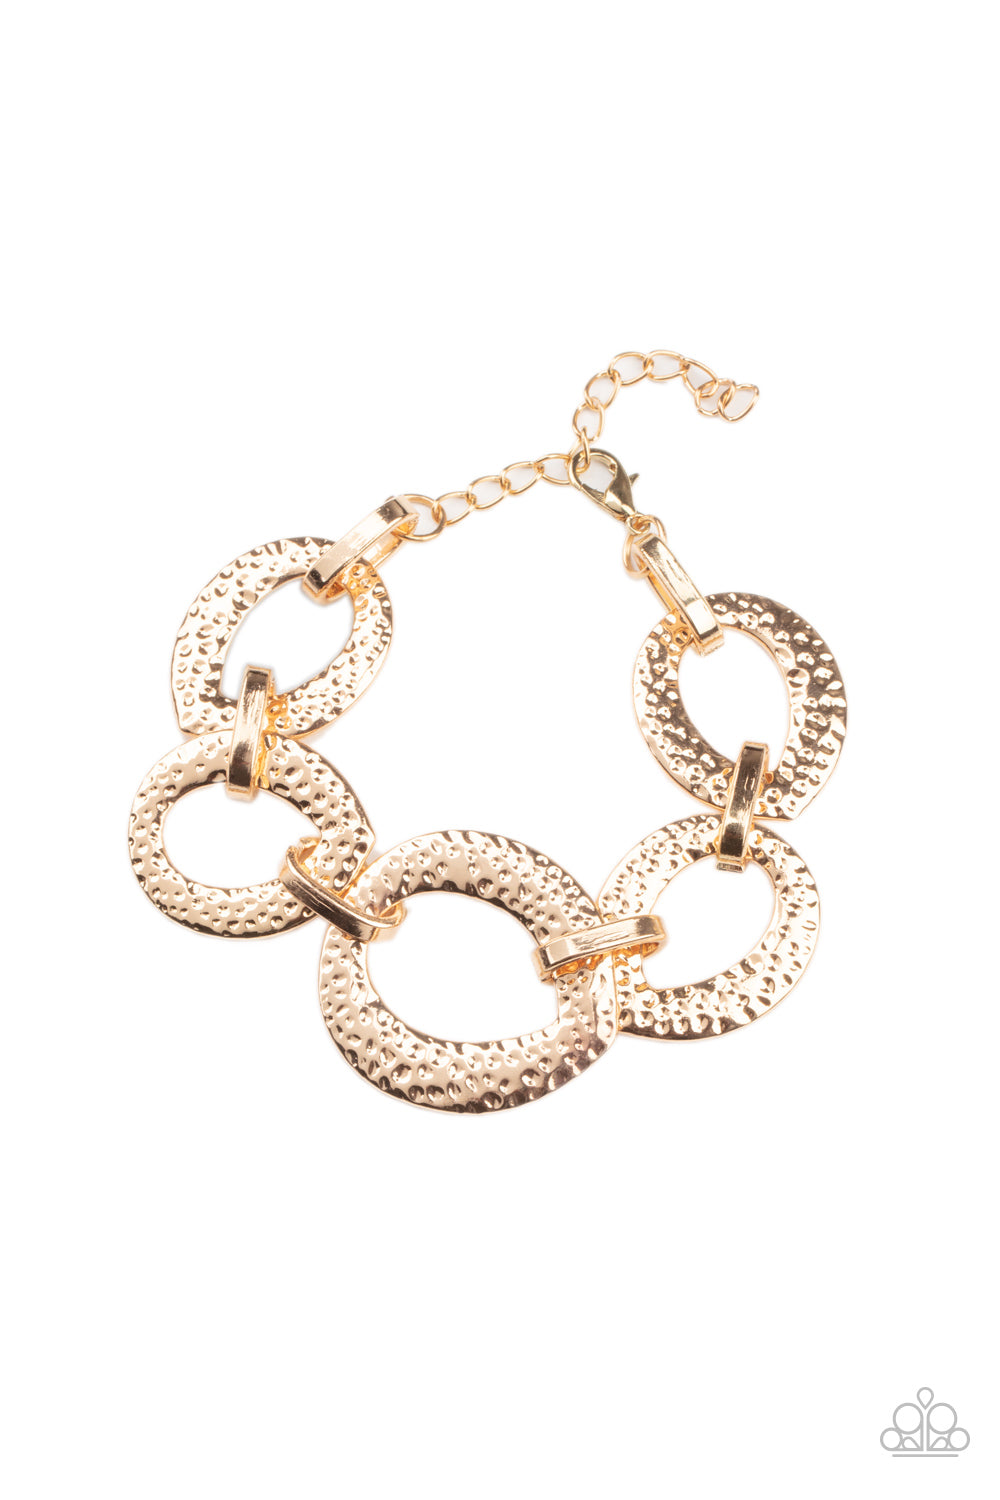 STEEL The Show - Gold Bracelet freeshipping - JewLz4u Gemstone Gallery